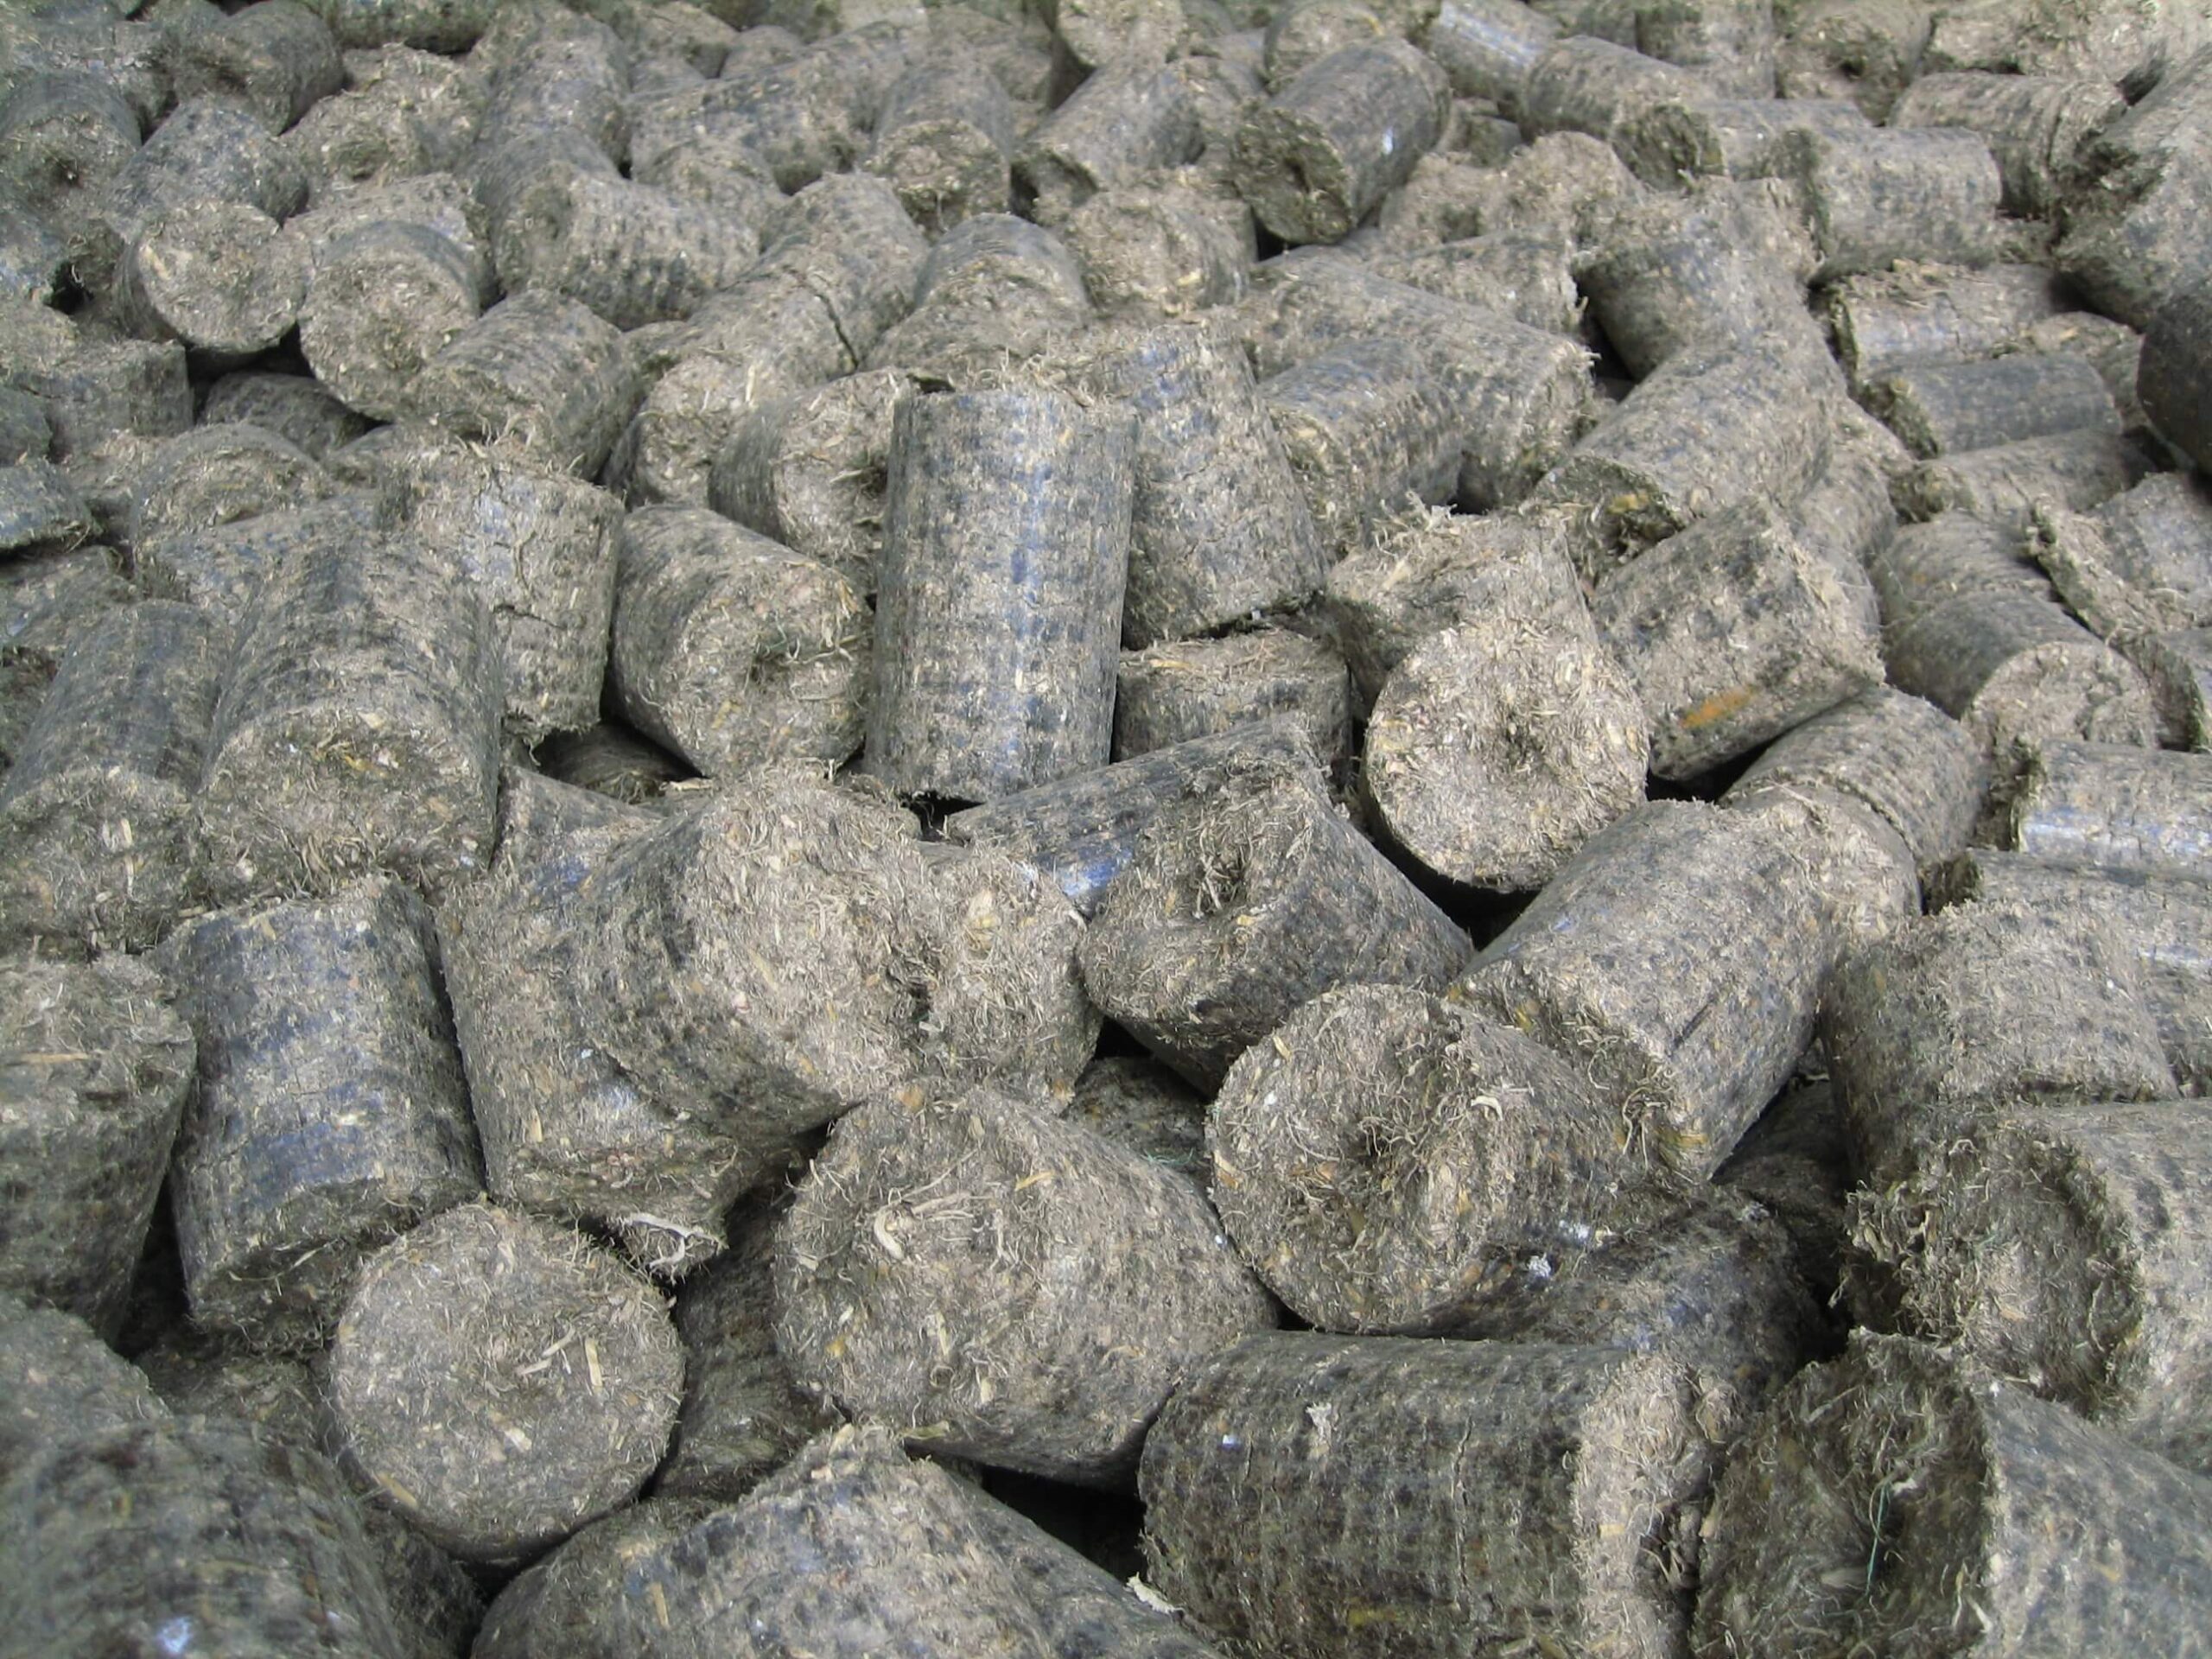 Agri Briquettes in the briquetting process